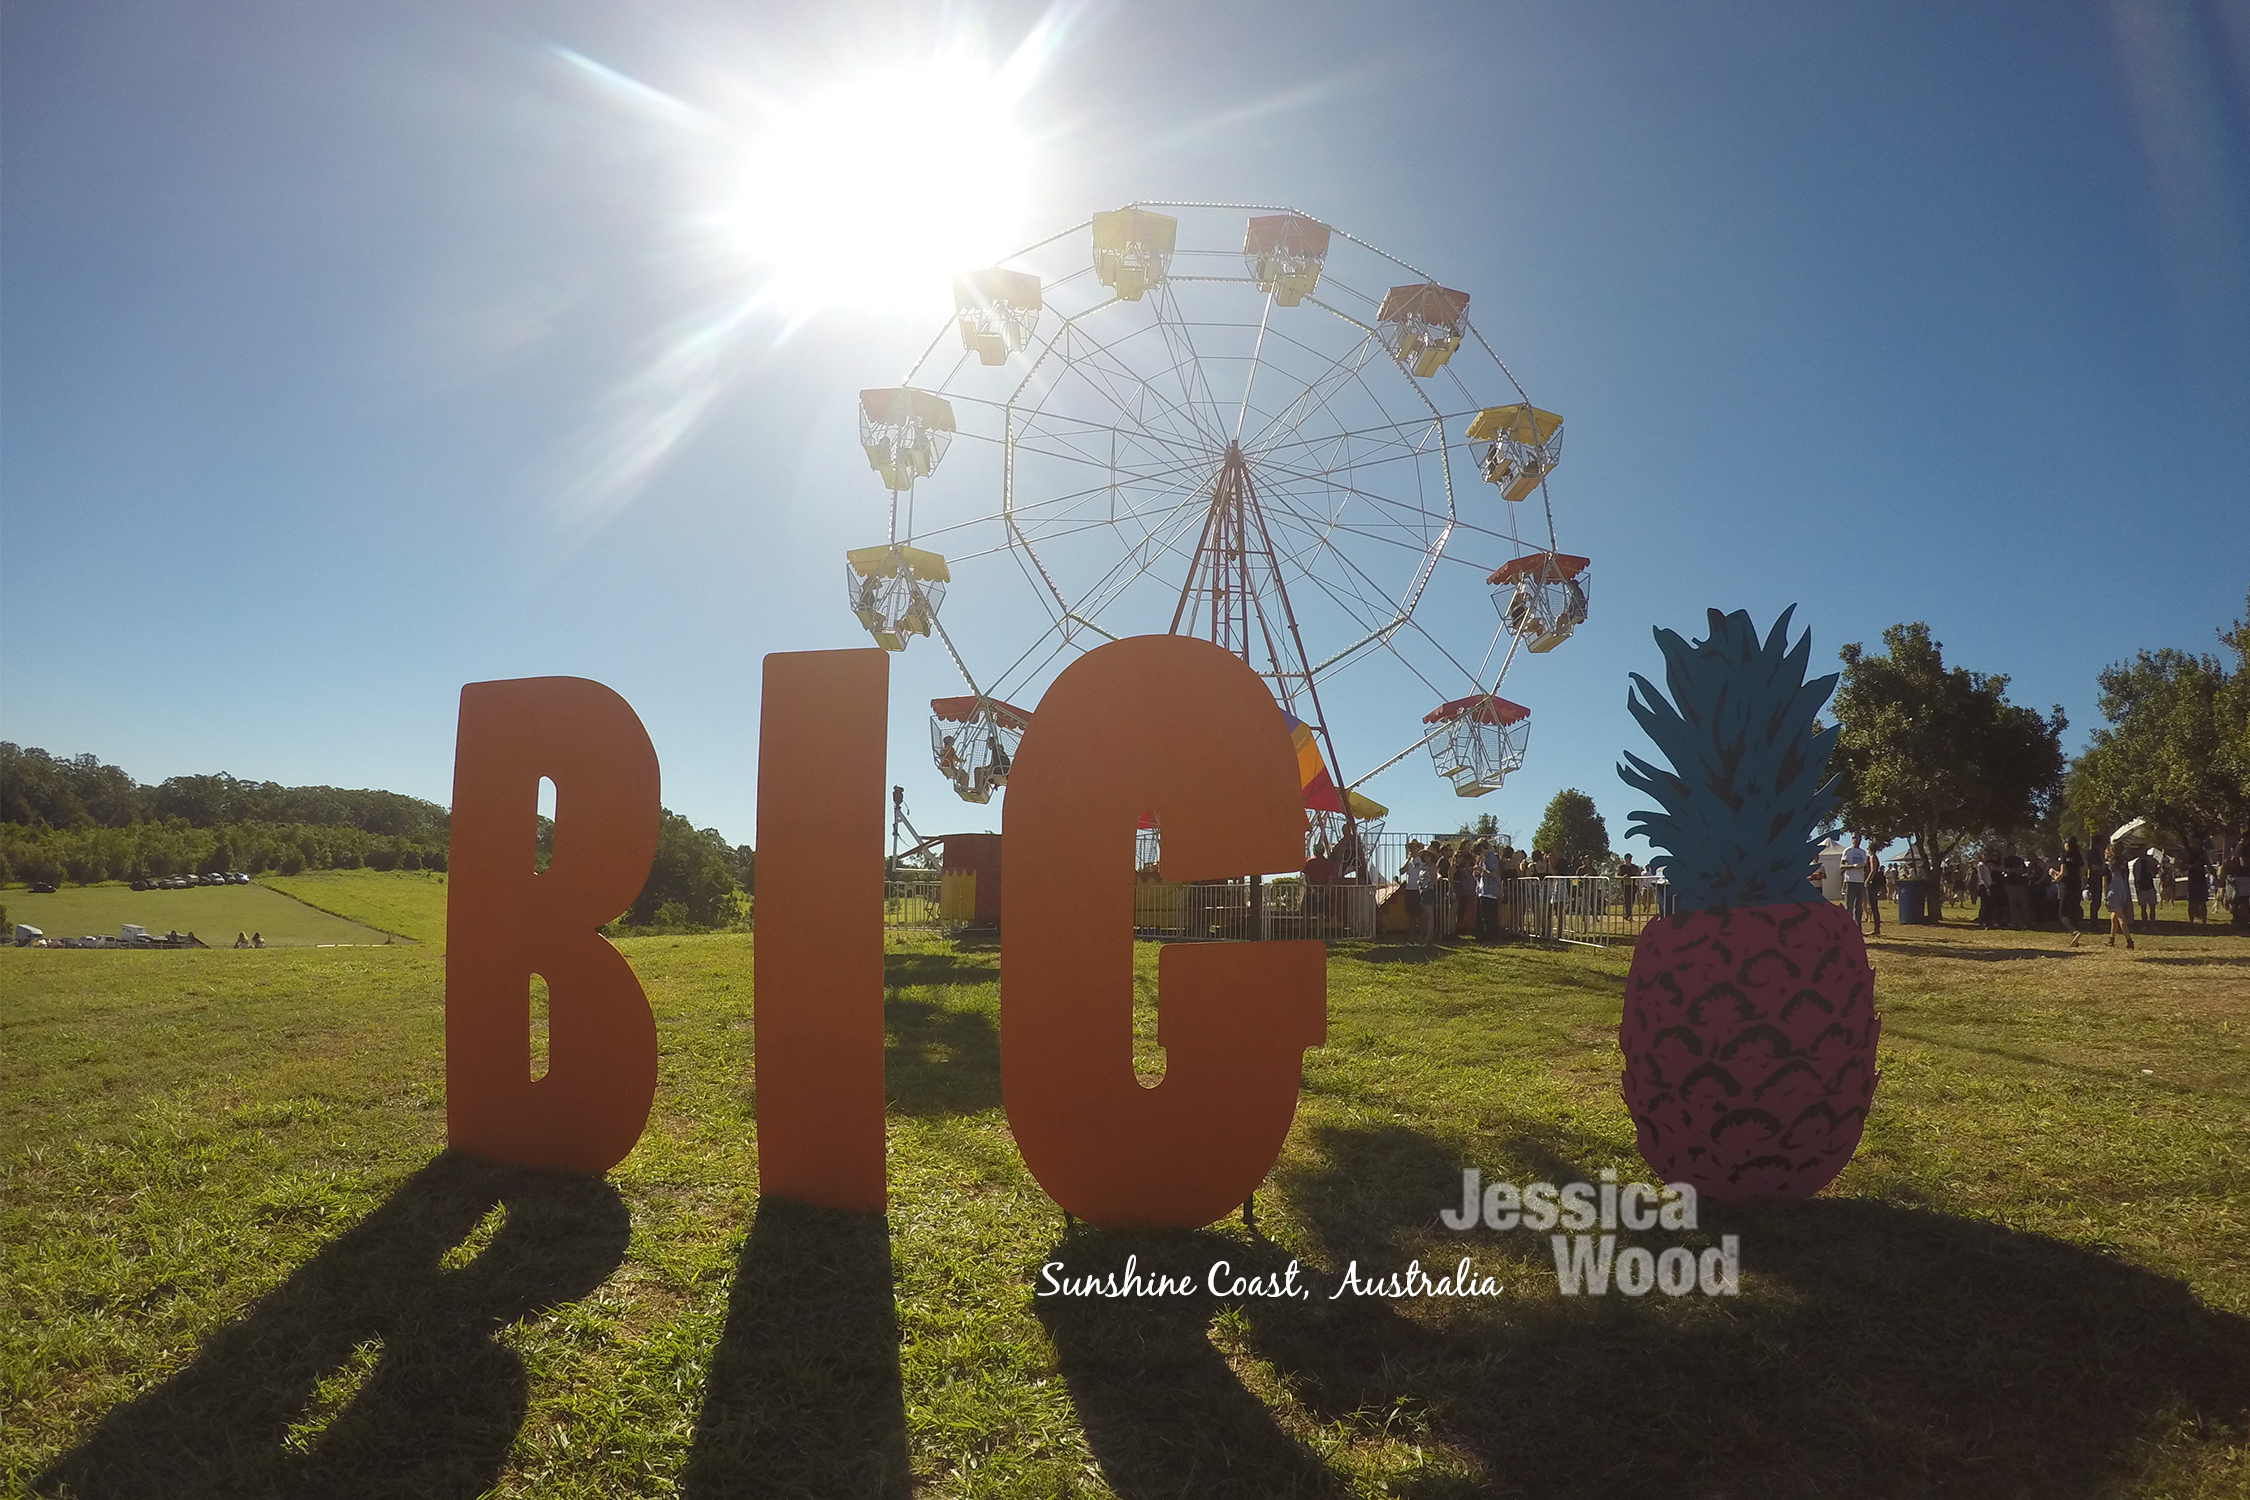 Big Pineapple Music Festival